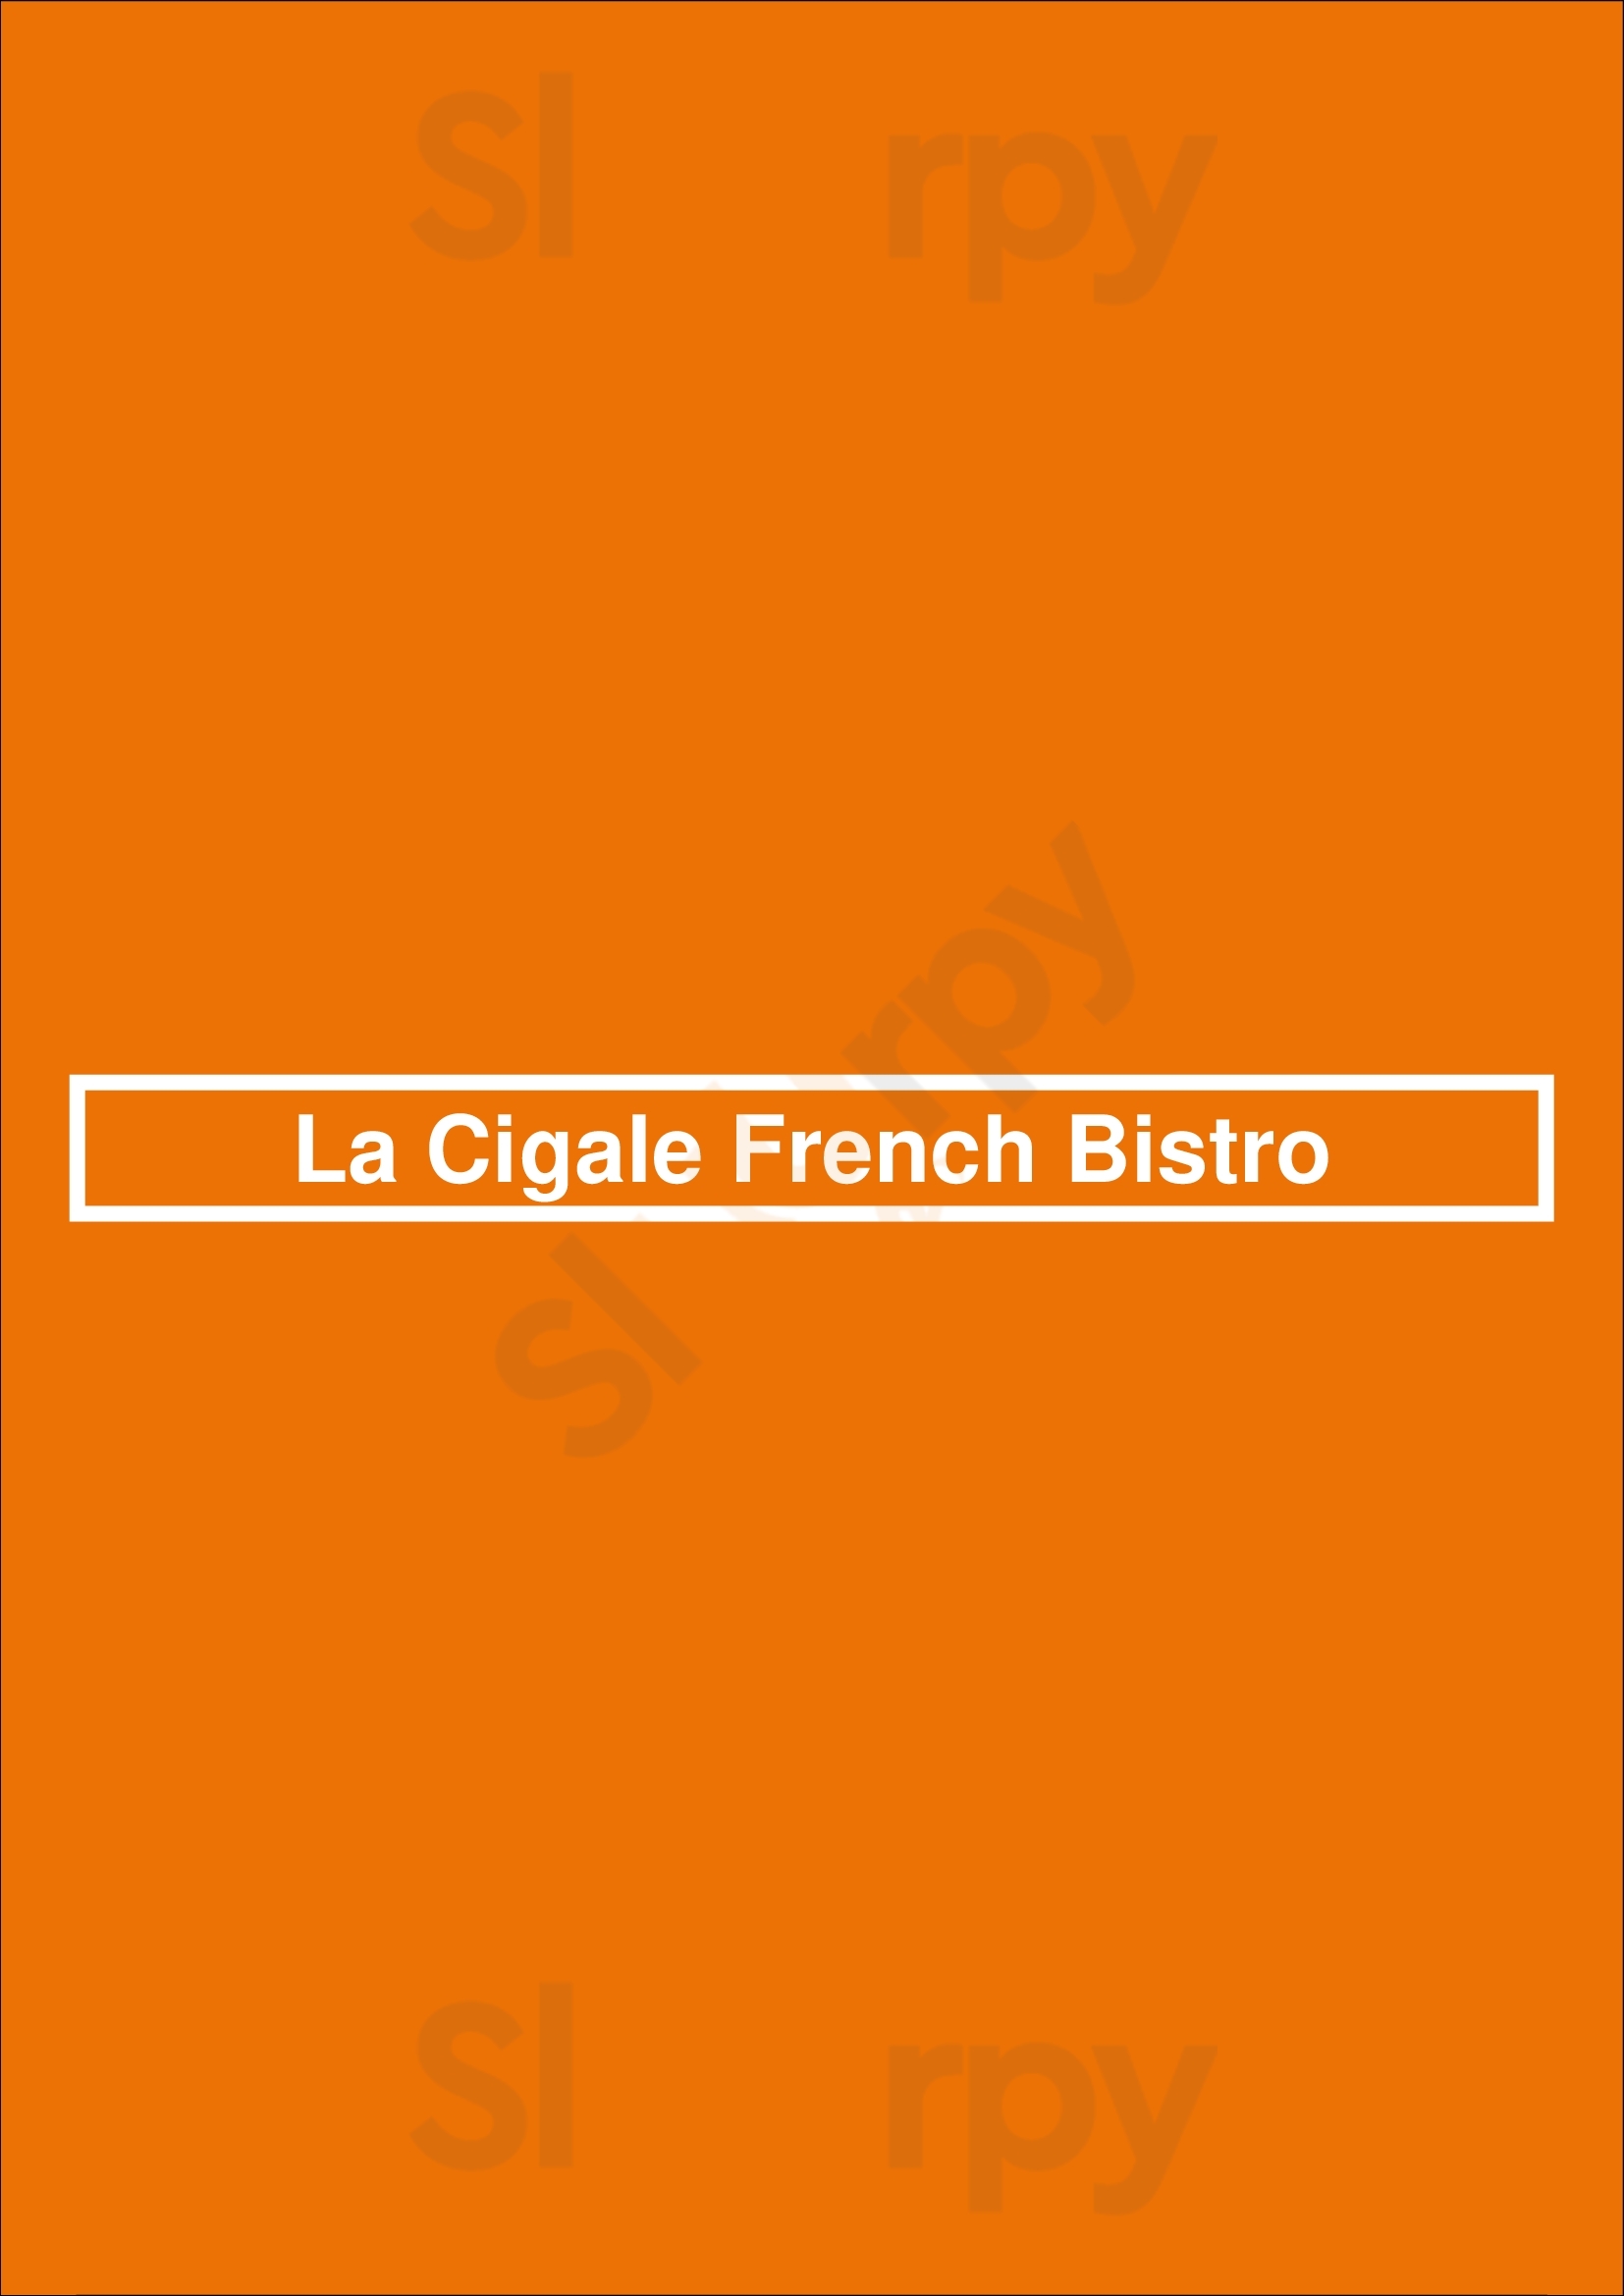 La Cigale French Bistro Vancouver Menu - 1